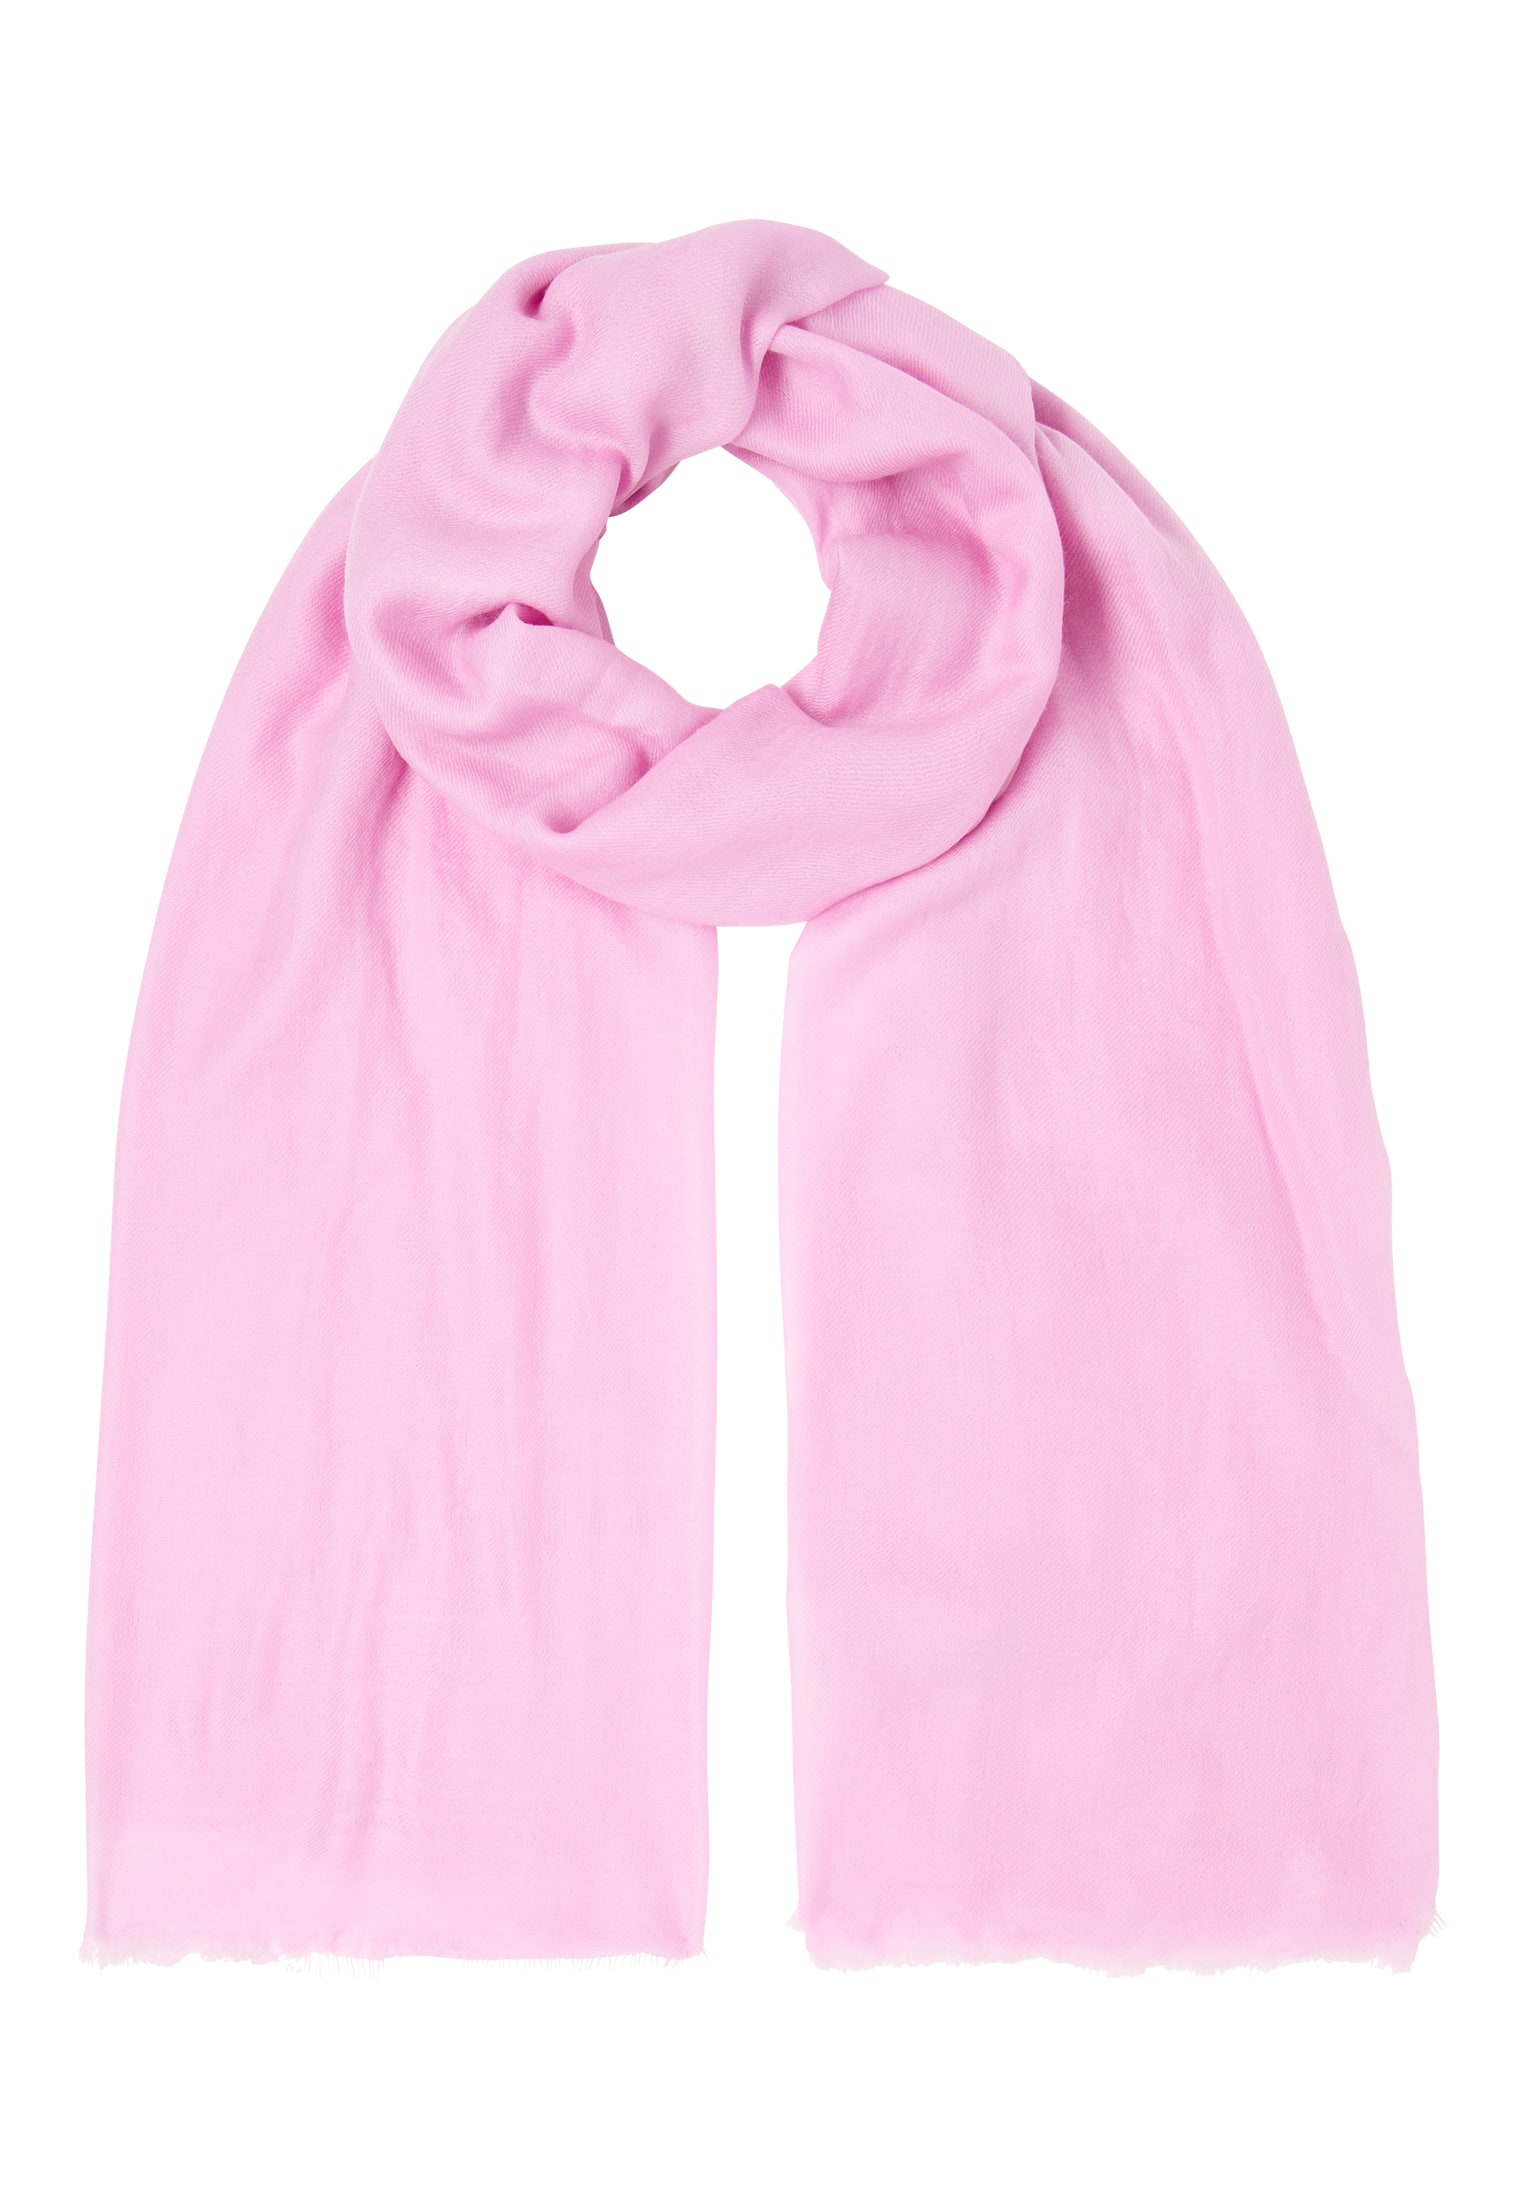 Schal in soft pink 2AC00067-15-12-OS unifarben | | OS pink soft 